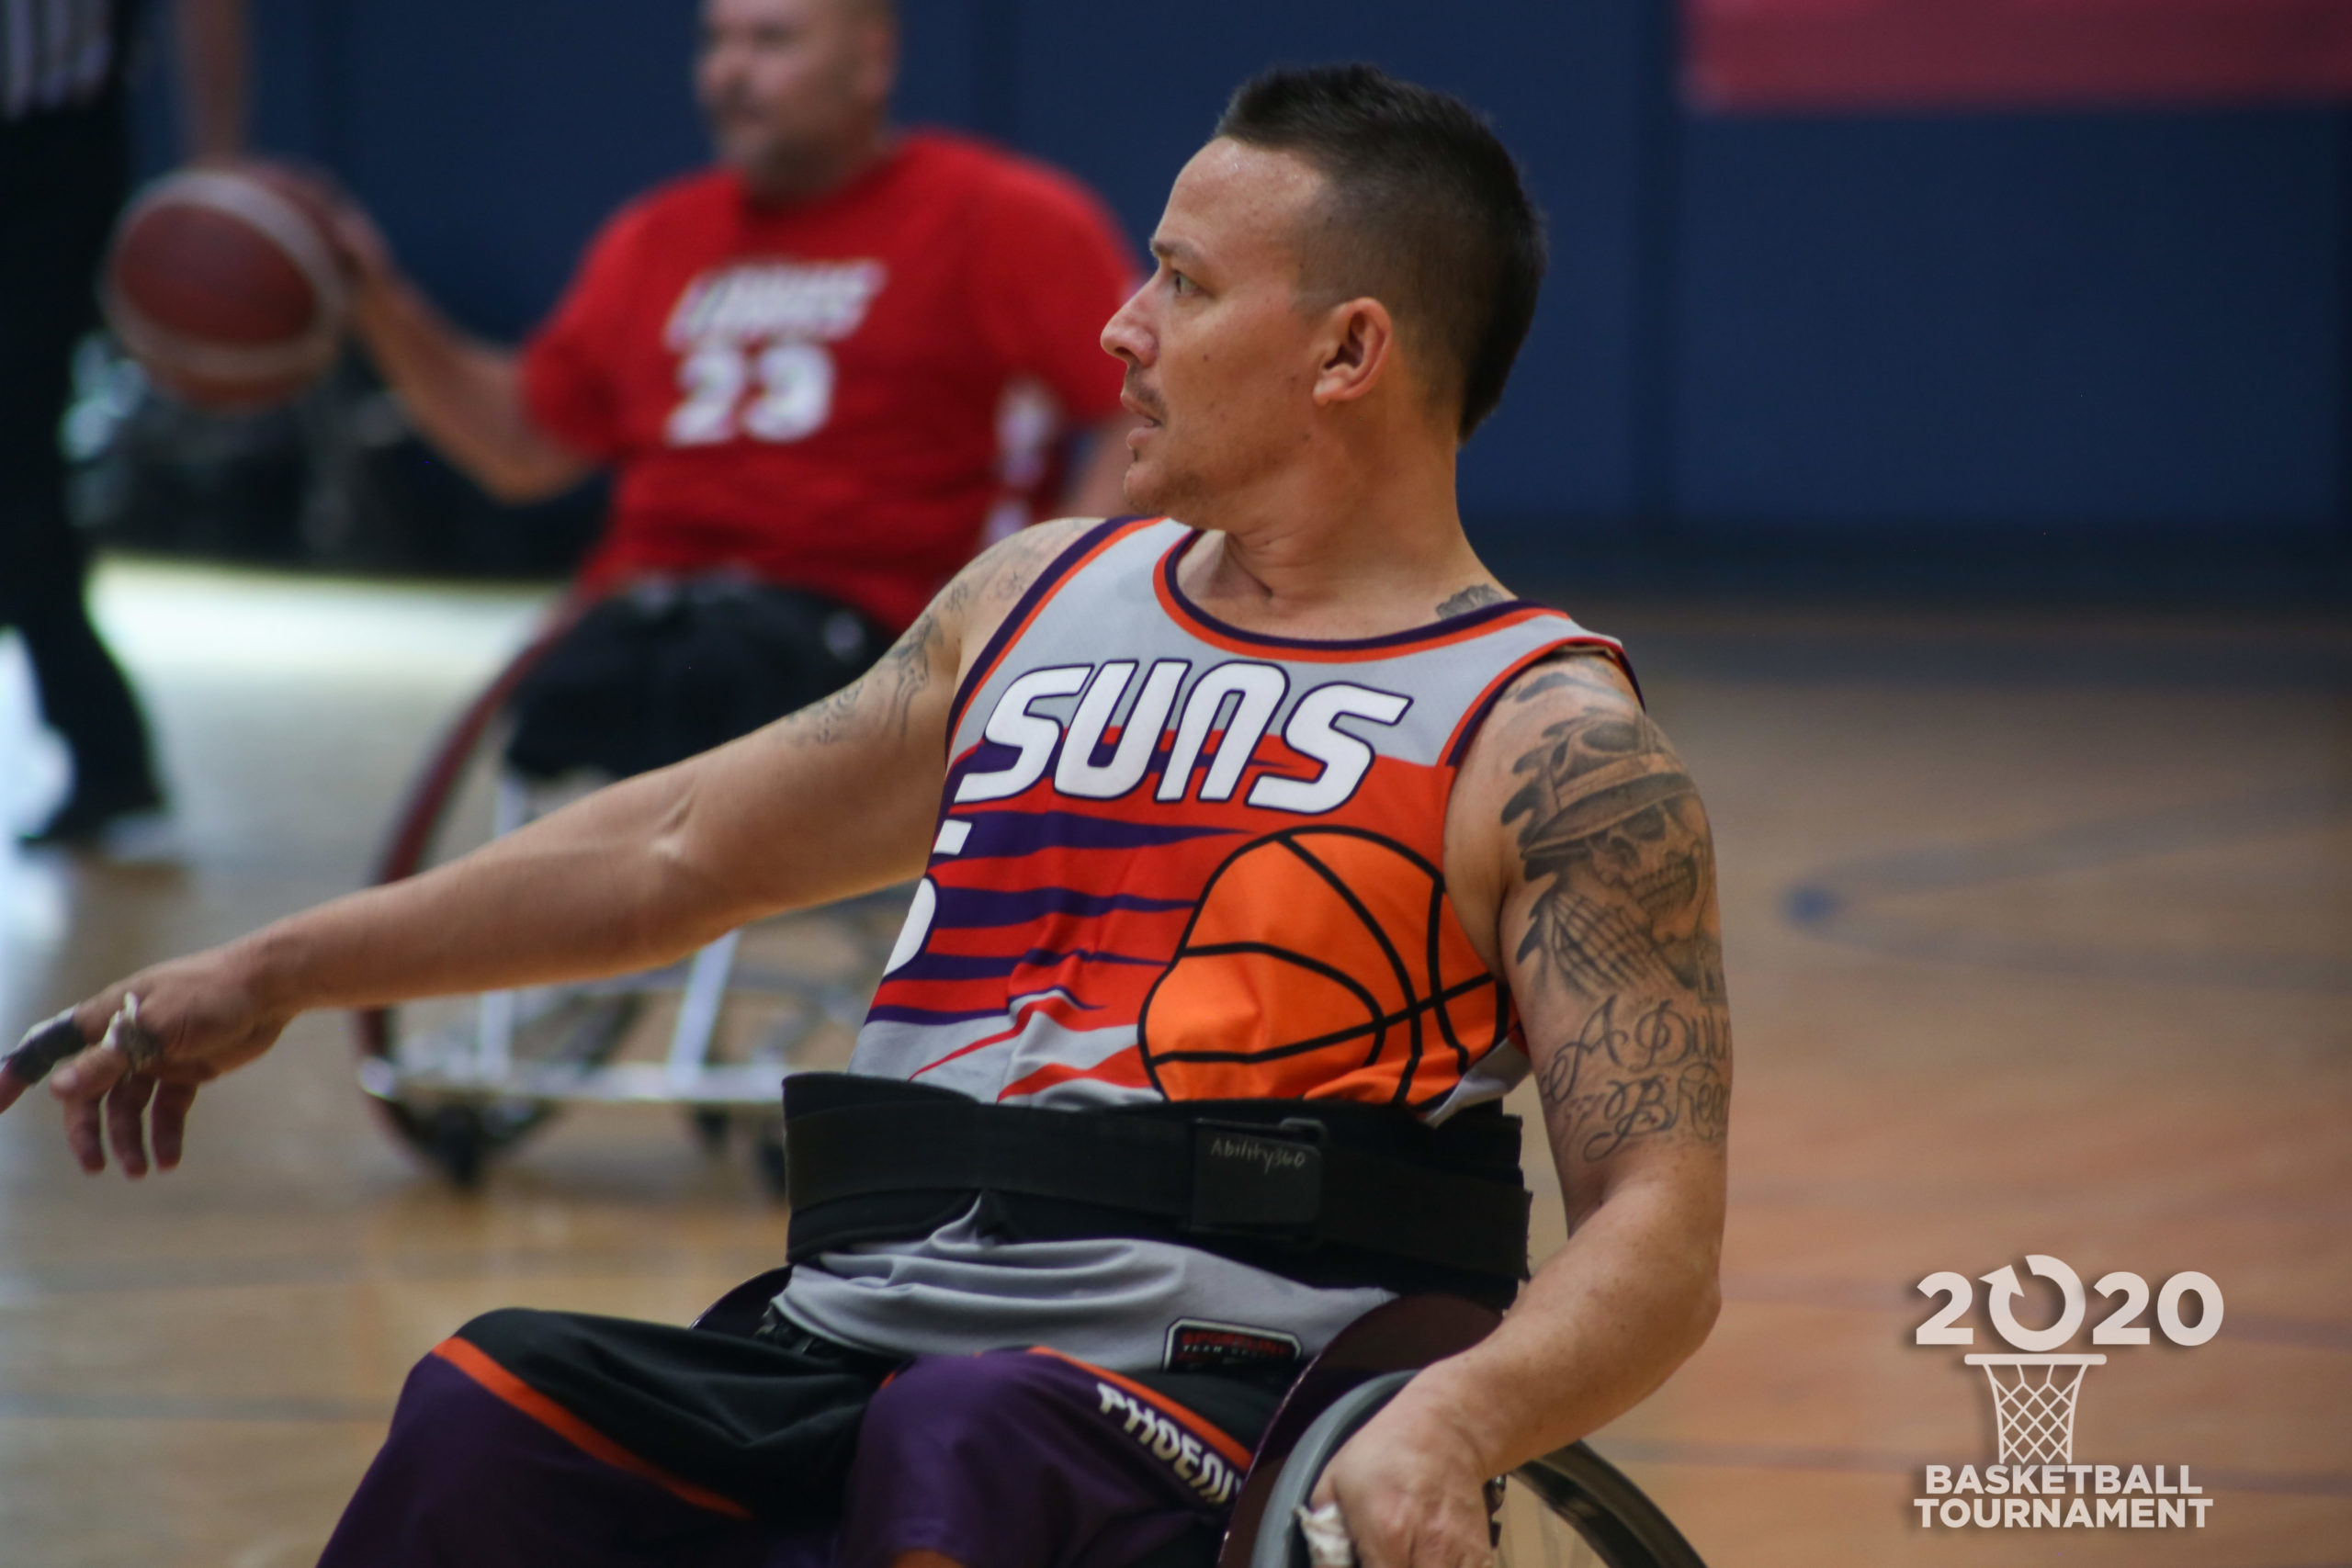 Athlete playing wheelchair basketball